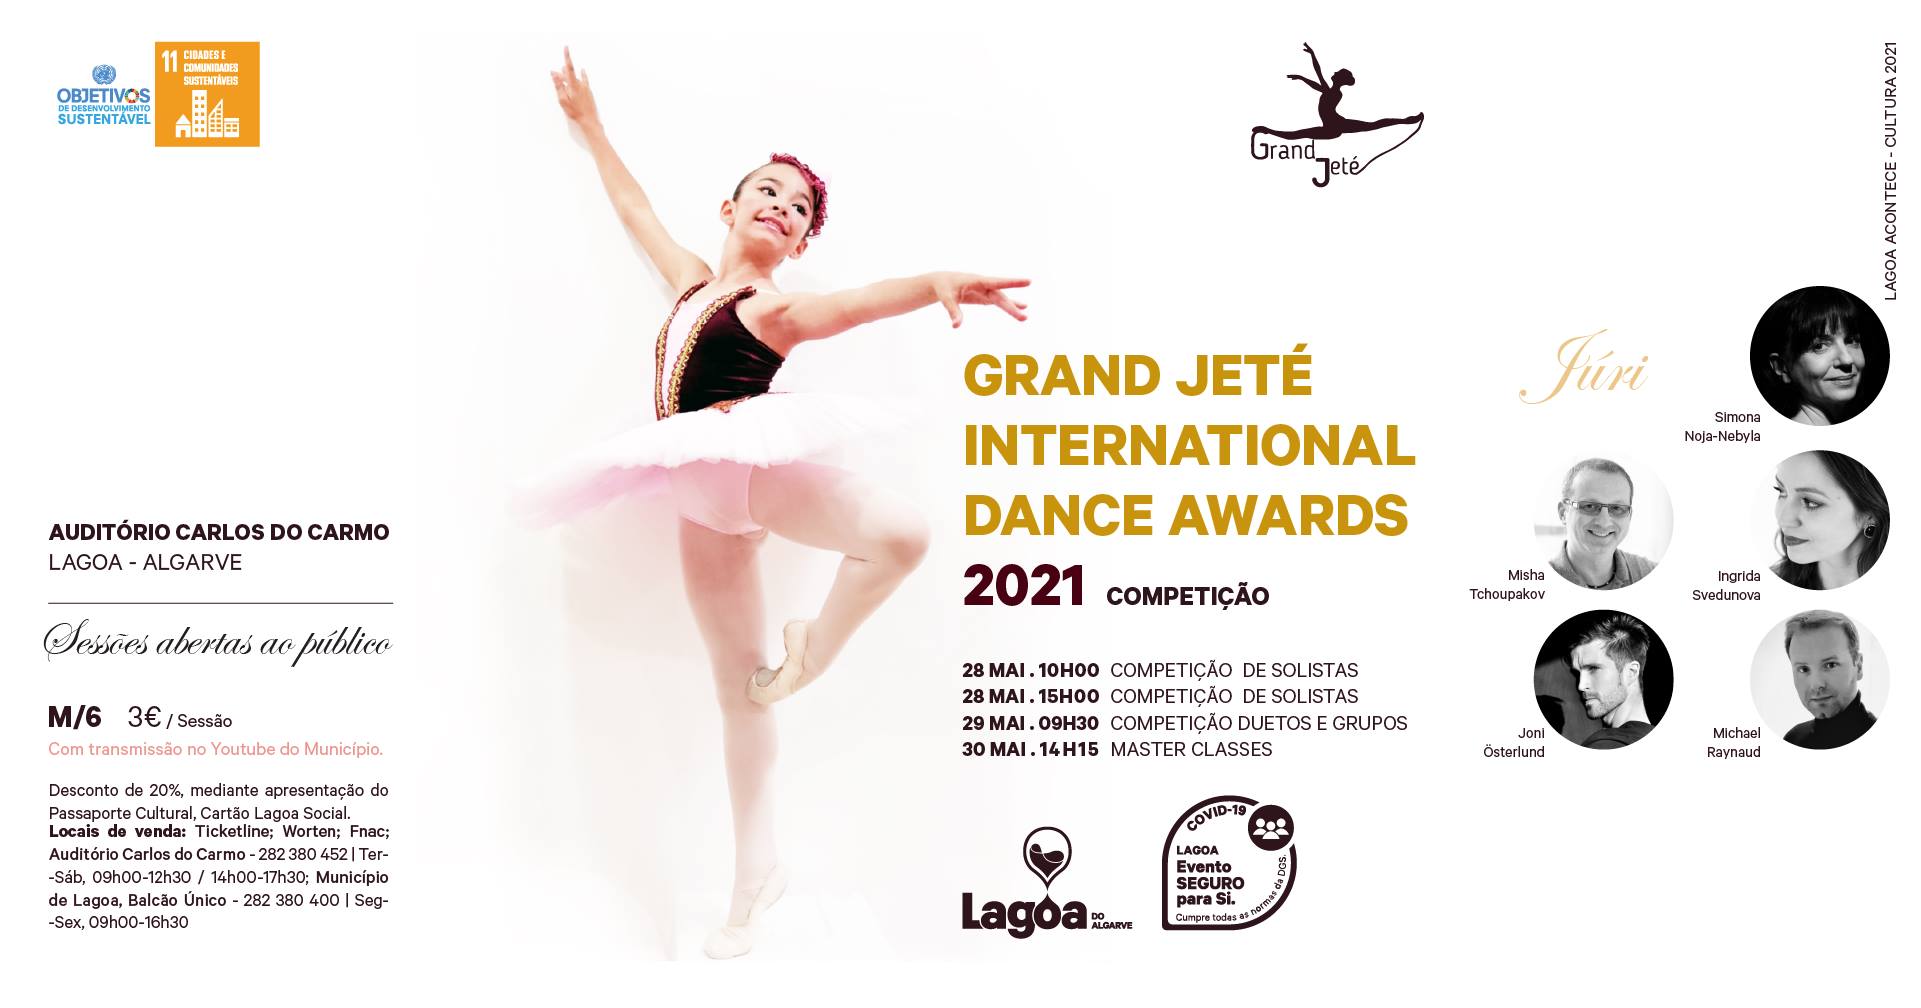 GRAND JETÉ INTERNATIONAL DANCE AWARDS